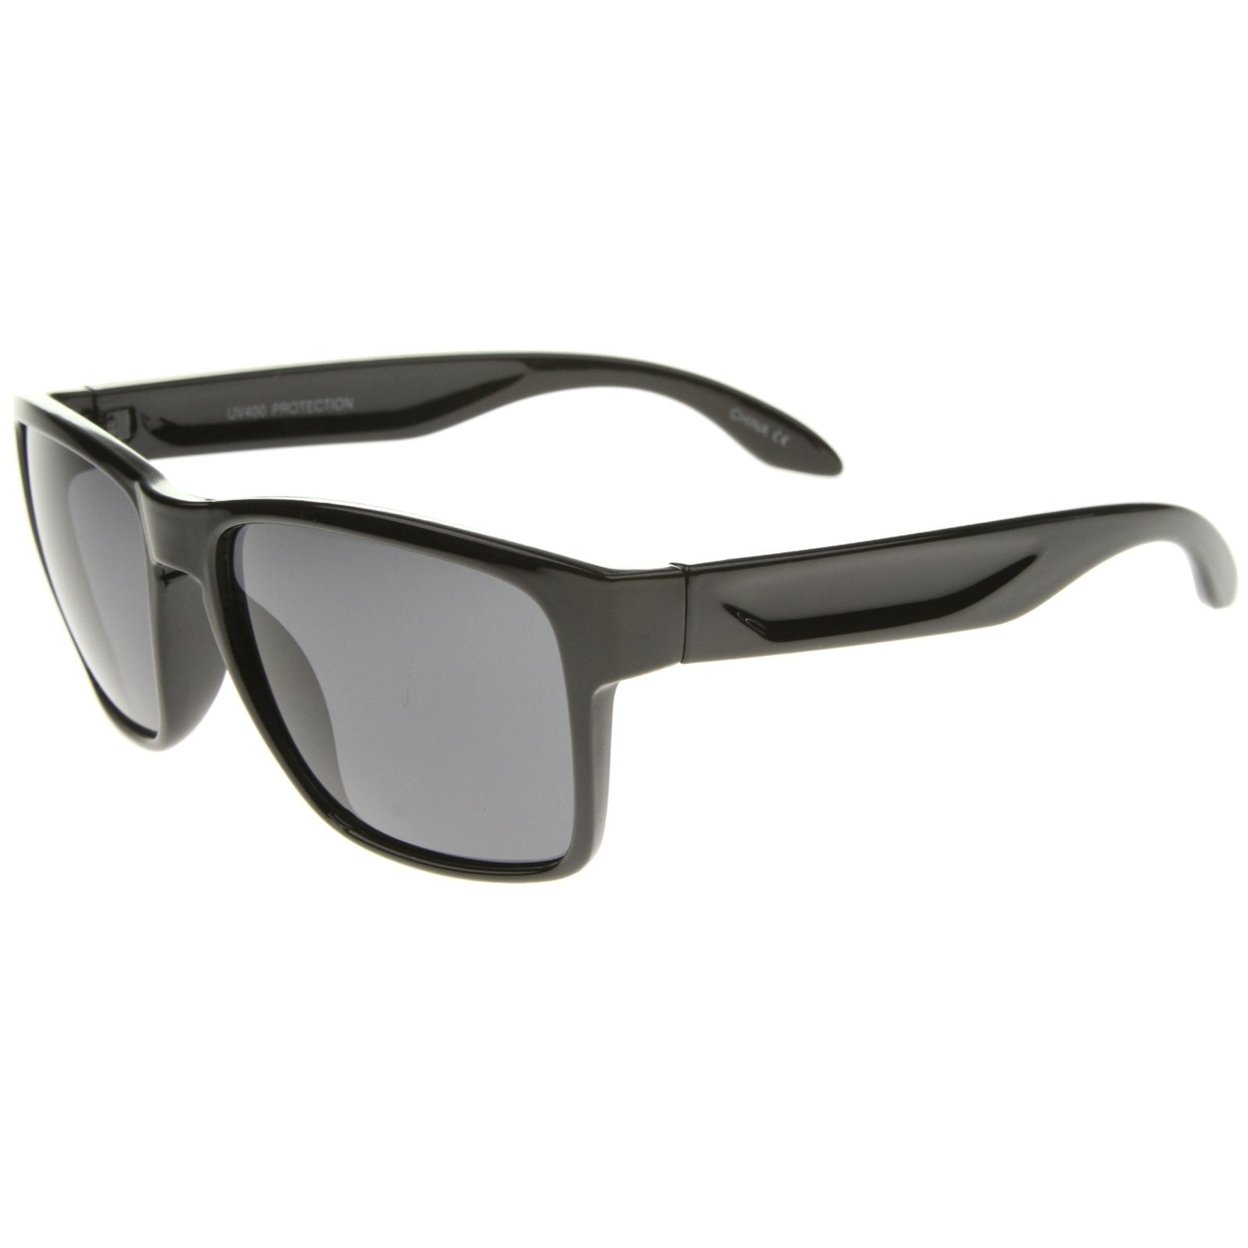 Action Sport Modern Lifestyle Frame Rectangle Sunglasses 59mm - Matte Black / Smoke